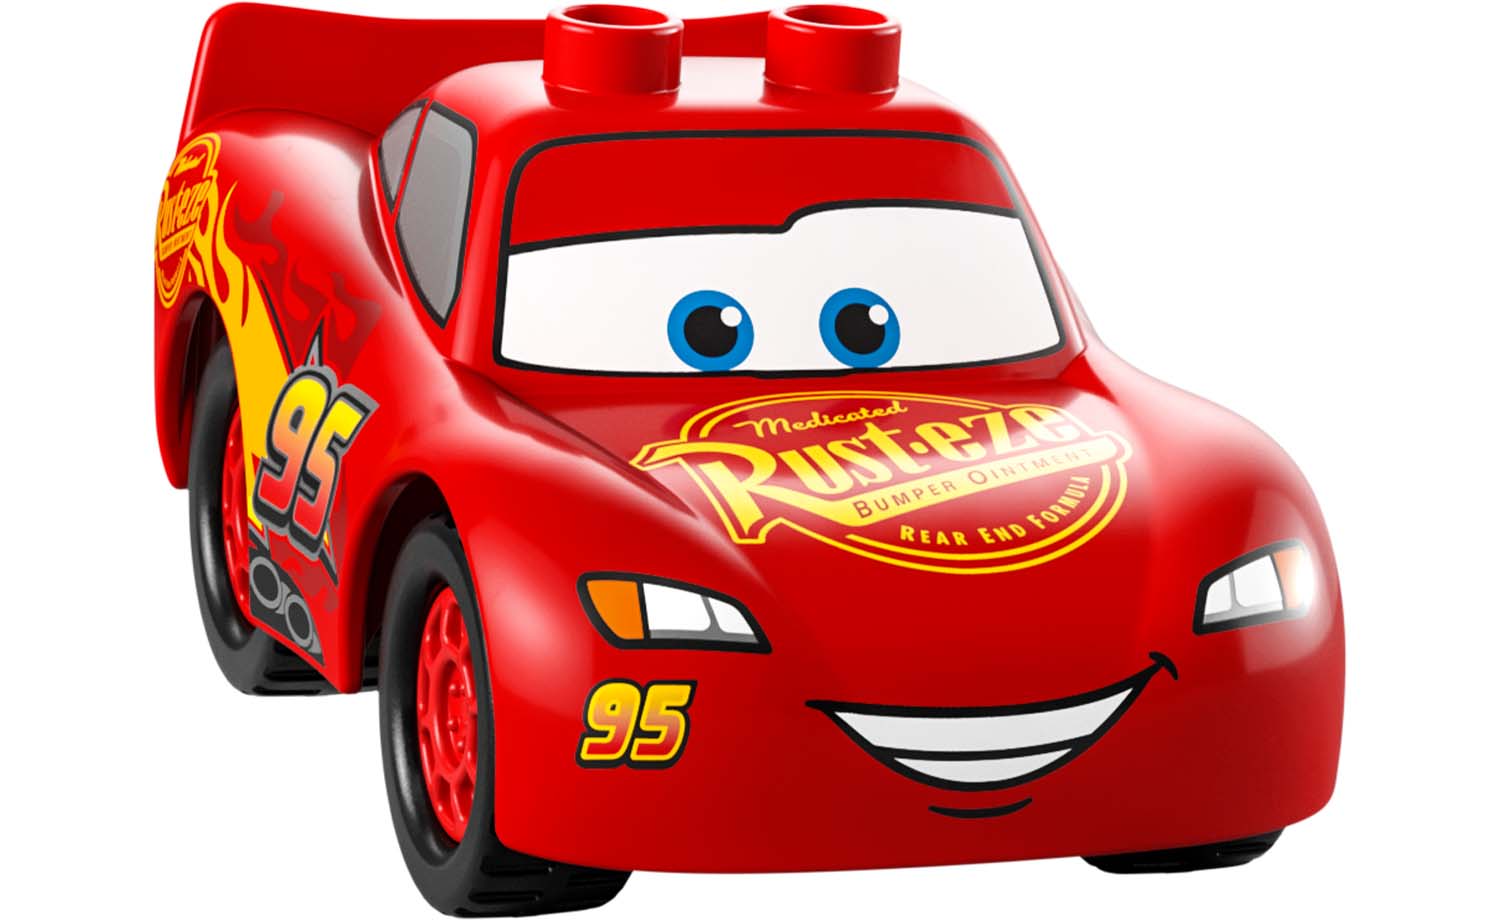 LEGO DUPLO | Disney Lightning McQueen & Mater's Car Wash Fun 10996